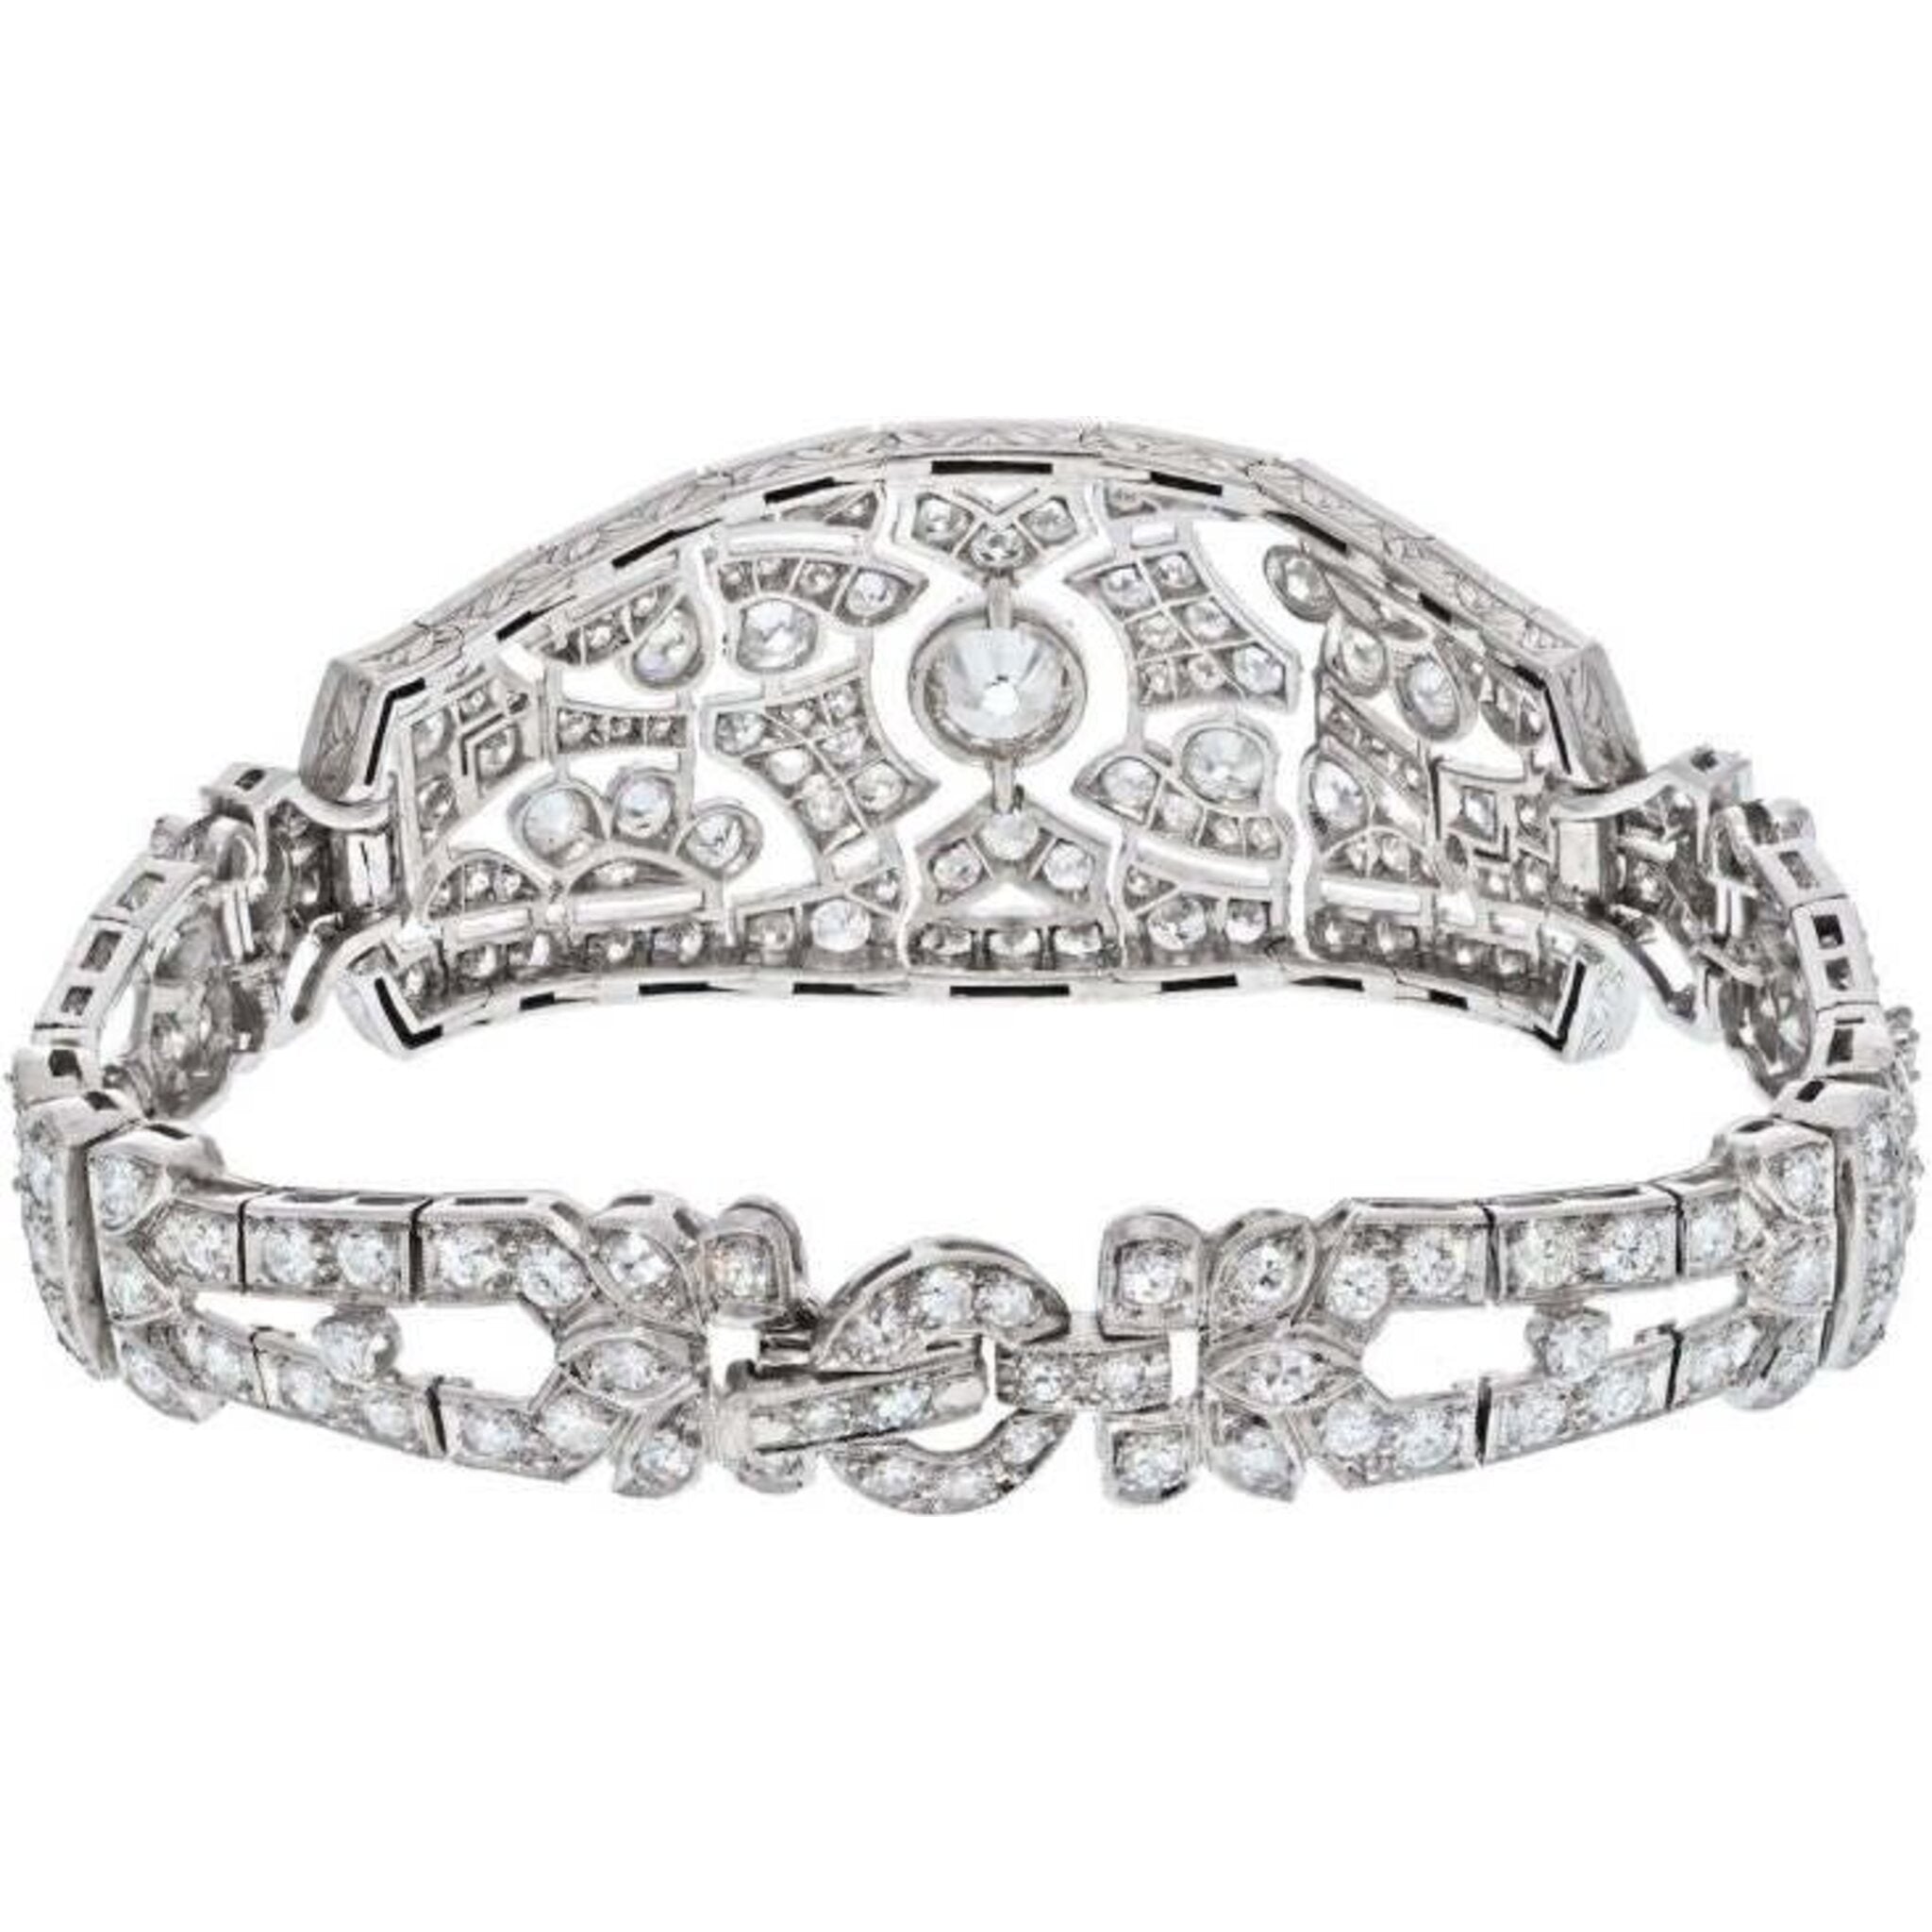 4.48ct Diamond and Platinum Bracelet - Art Deco - Vintage Circa 1940 A9557  on Vimeo